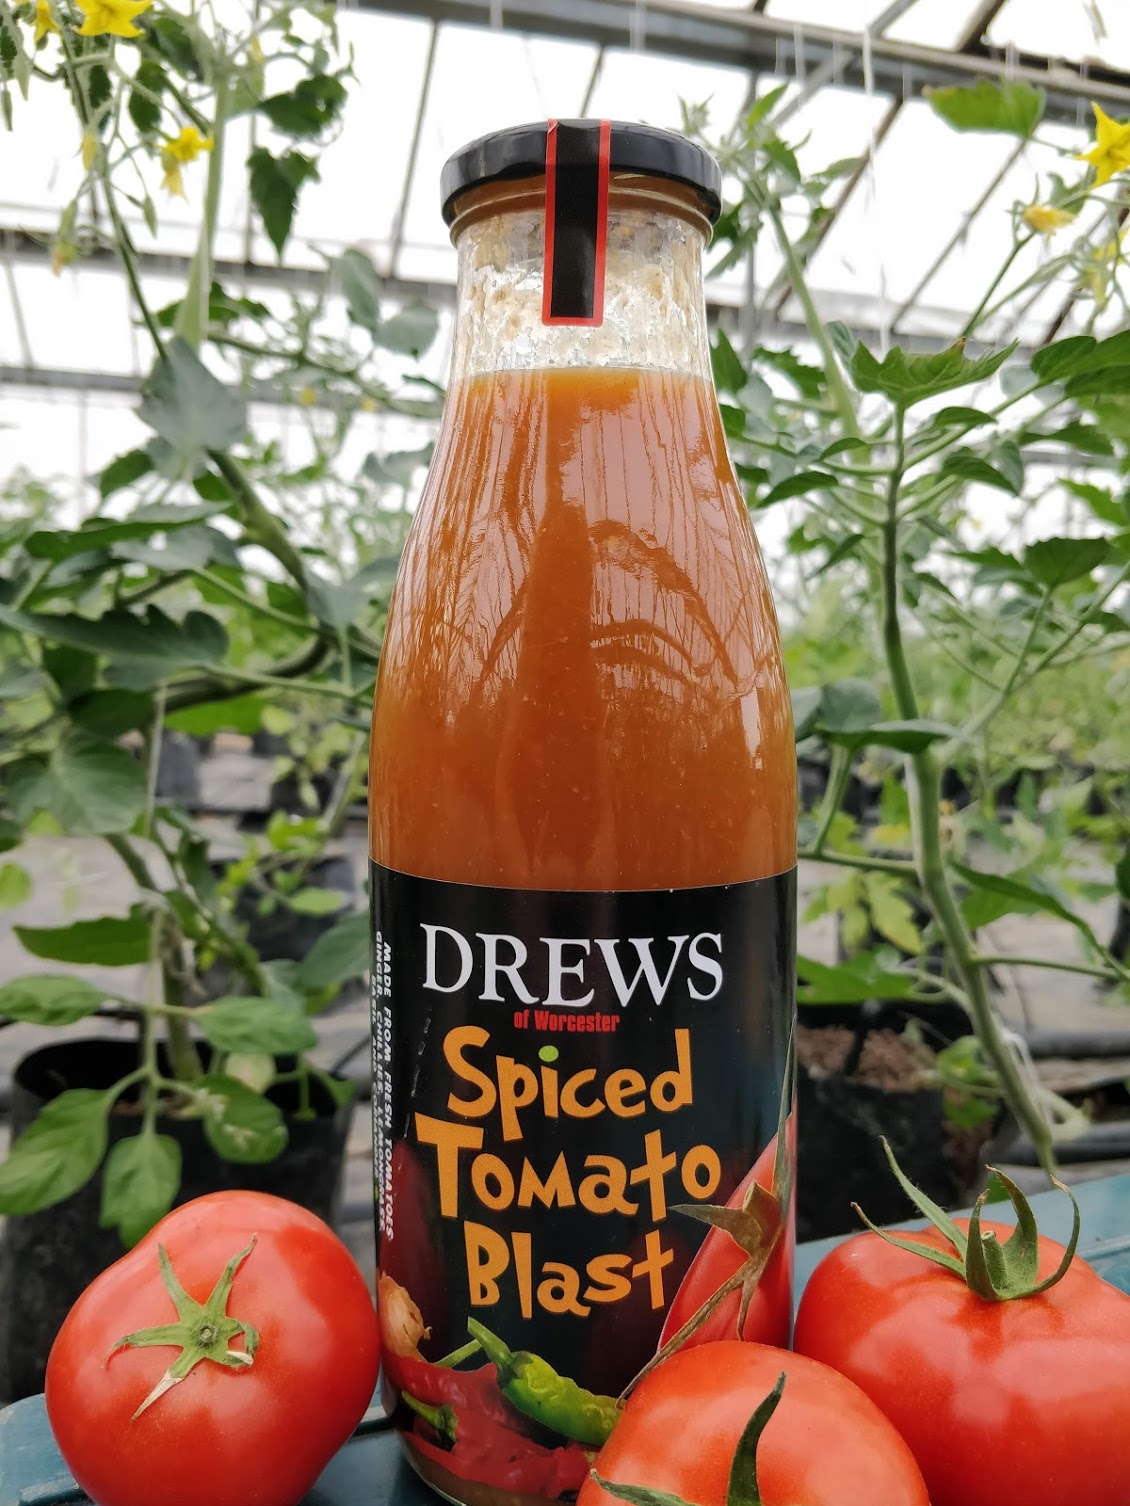 Tomato Juice - Spiced Tomato Blast